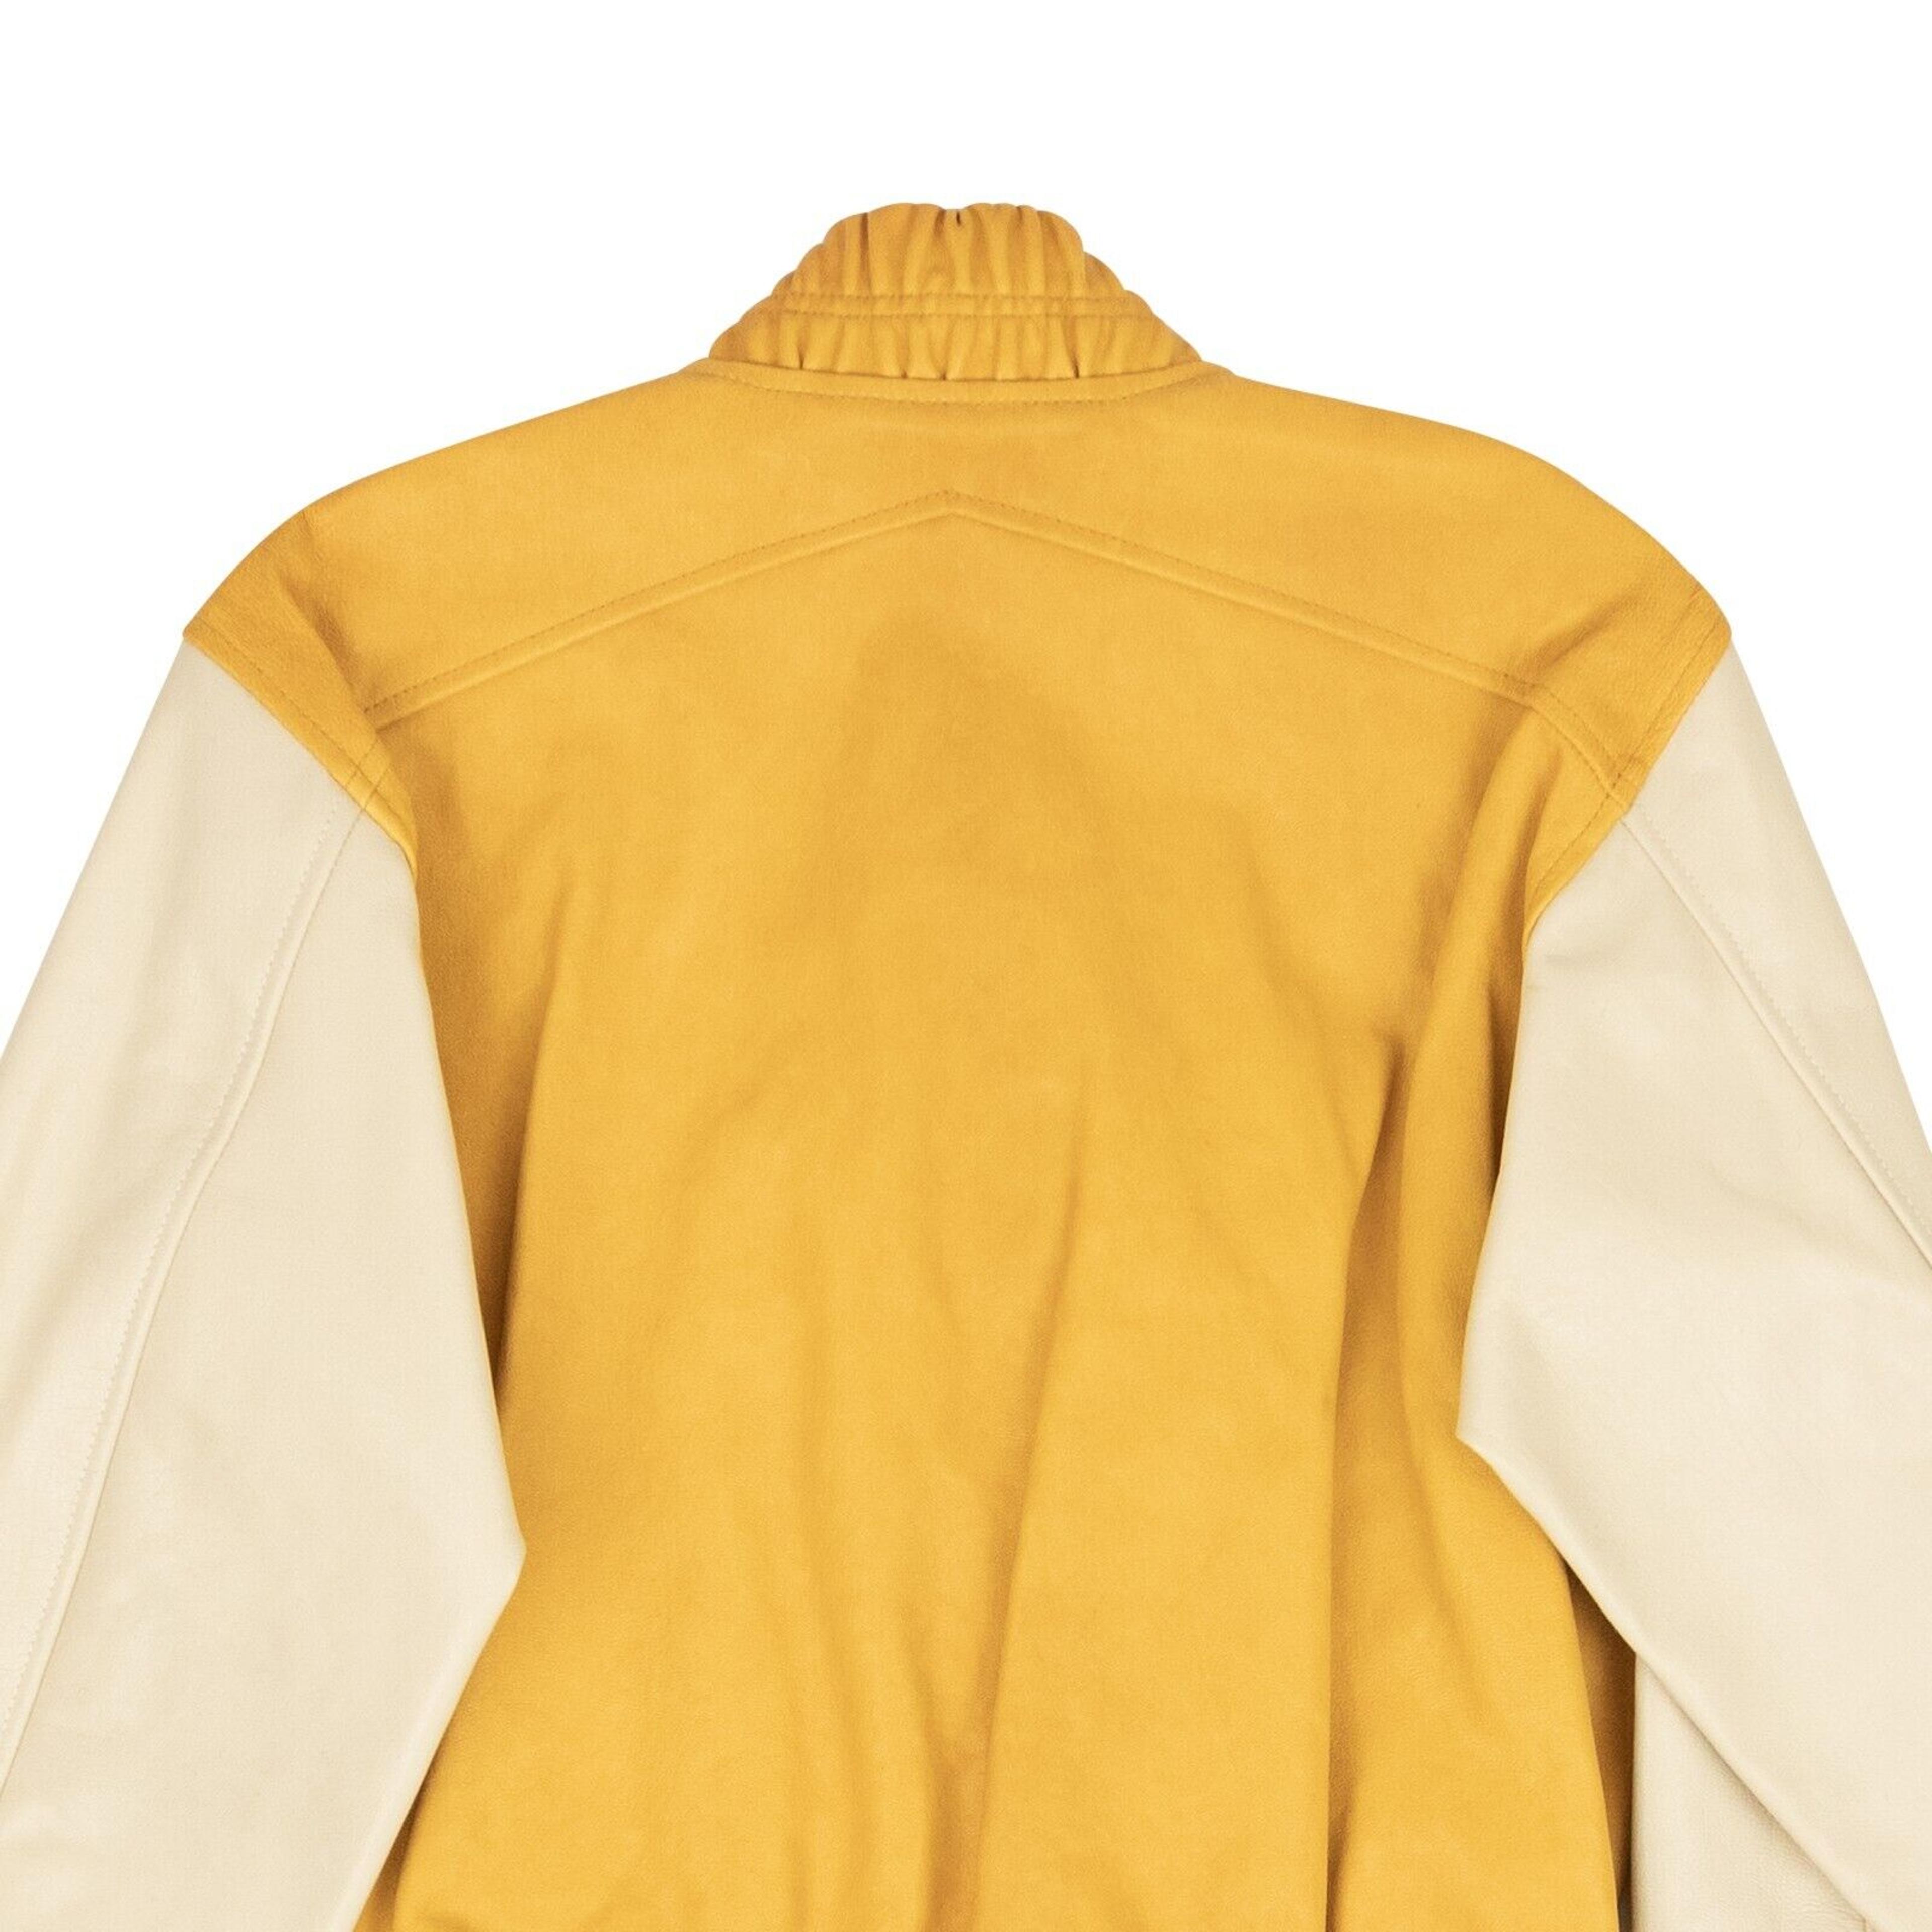 Alternate View 3 of Yellow And Creme Varsity Jacket